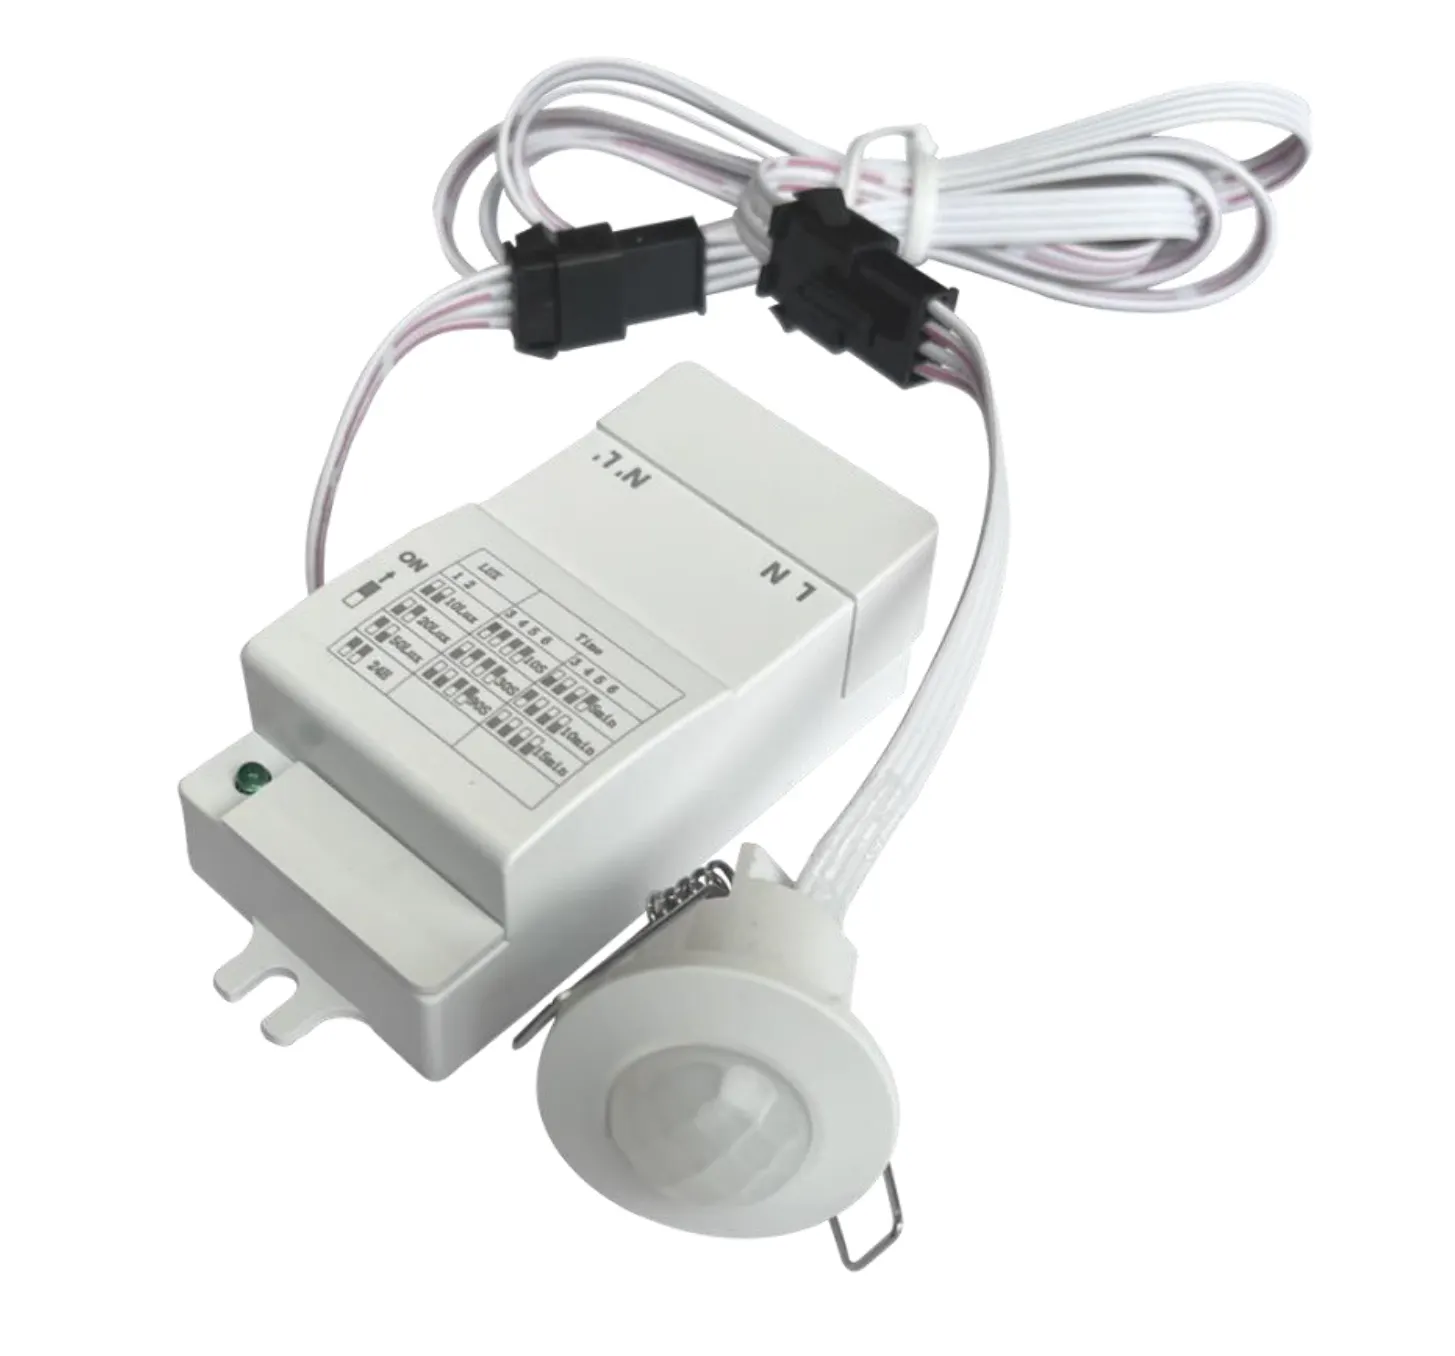 120 Degree PIR Motion Sensor with Long Connecting Cable, Infrared Sensor for Light Control, ir Sensor